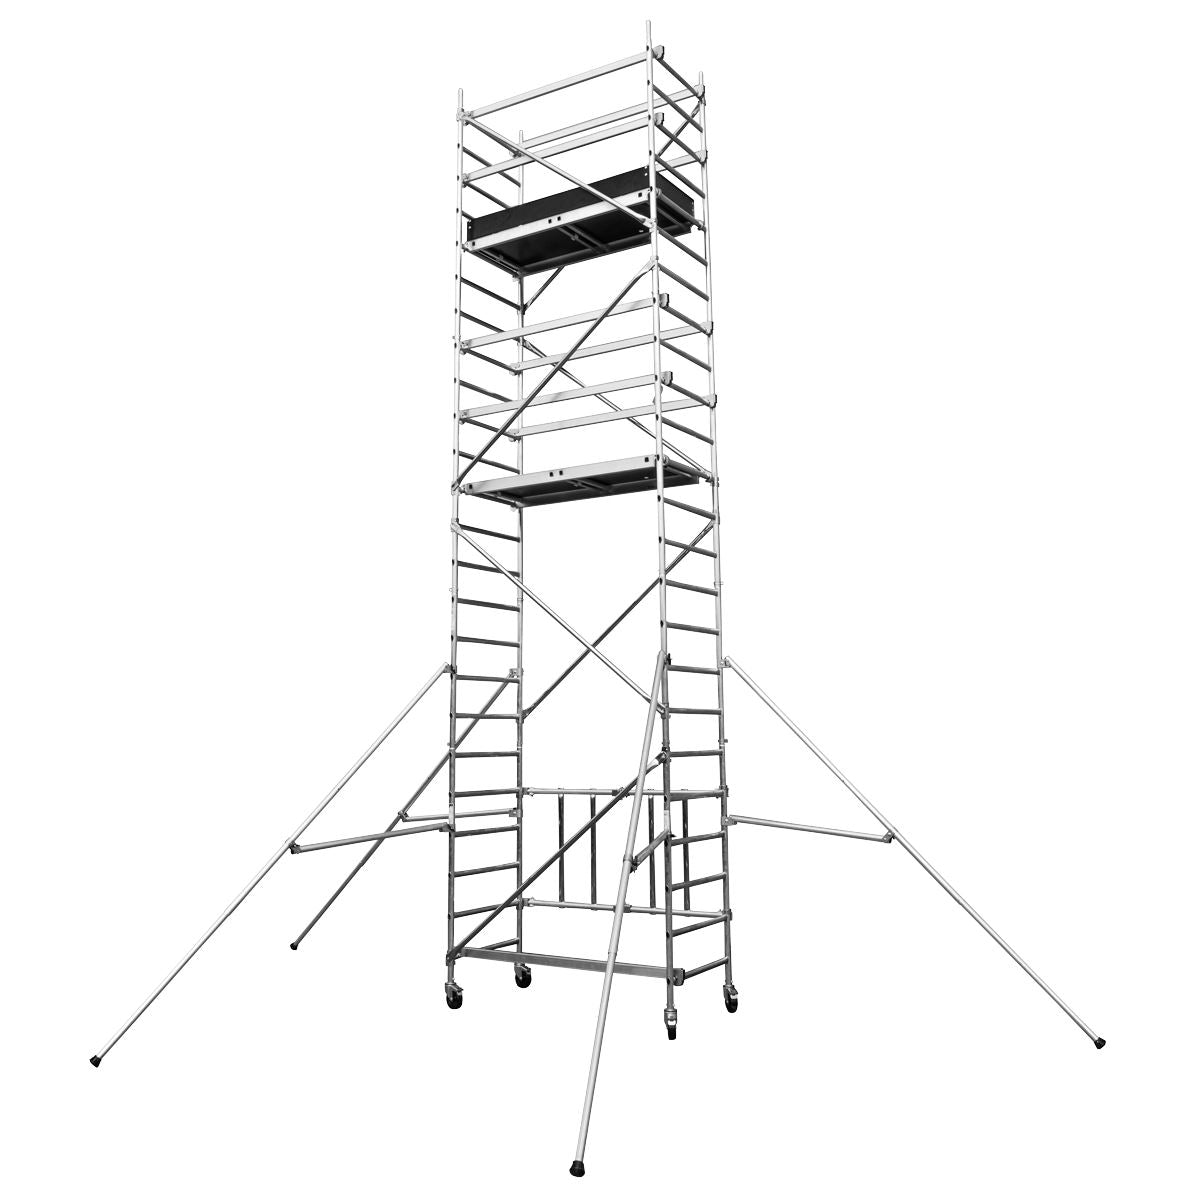 Sealey Platform Scaffold Tower Extension Pack 4 EN 1004 SSCL4